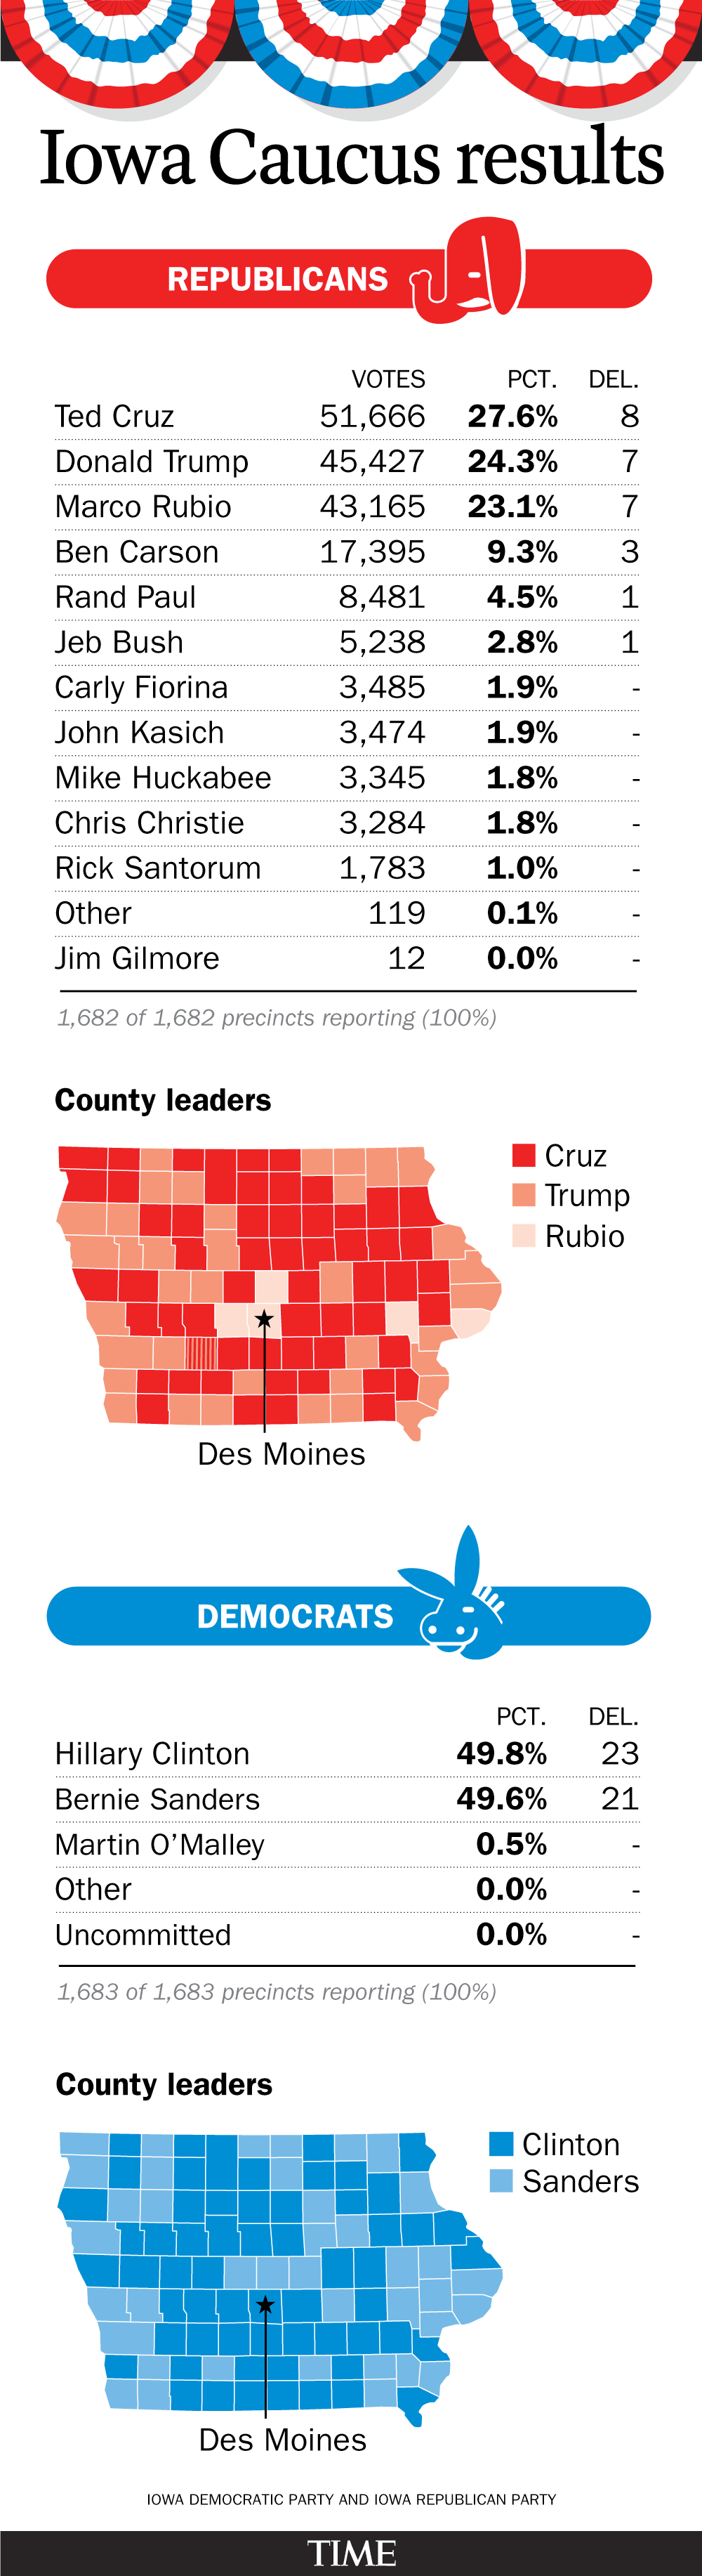 Iowa Caucus results 2016